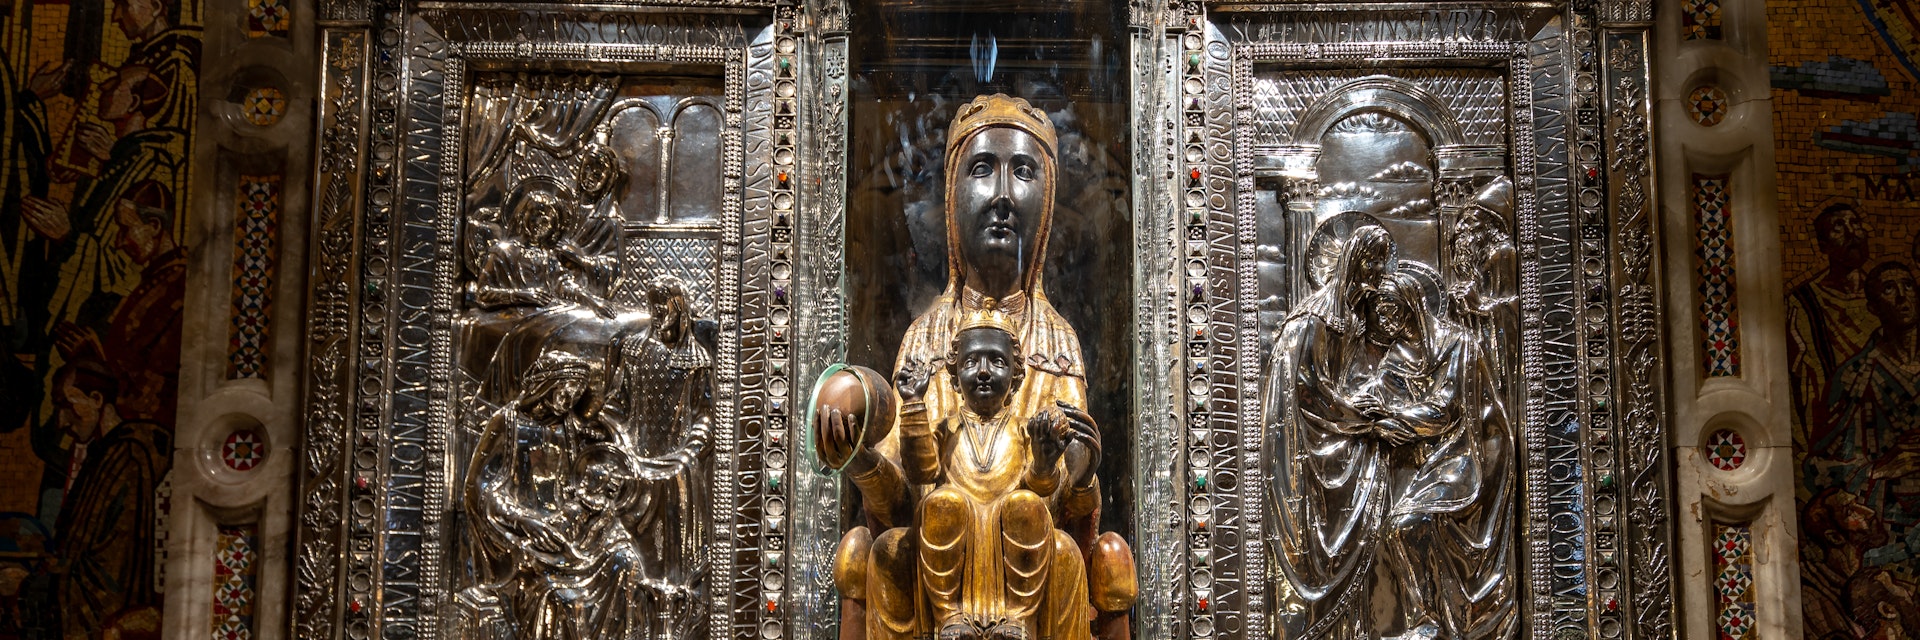 Wooden statue of the Virgin and Child, in the Benedictine monastery of Santa María de Montserrat.